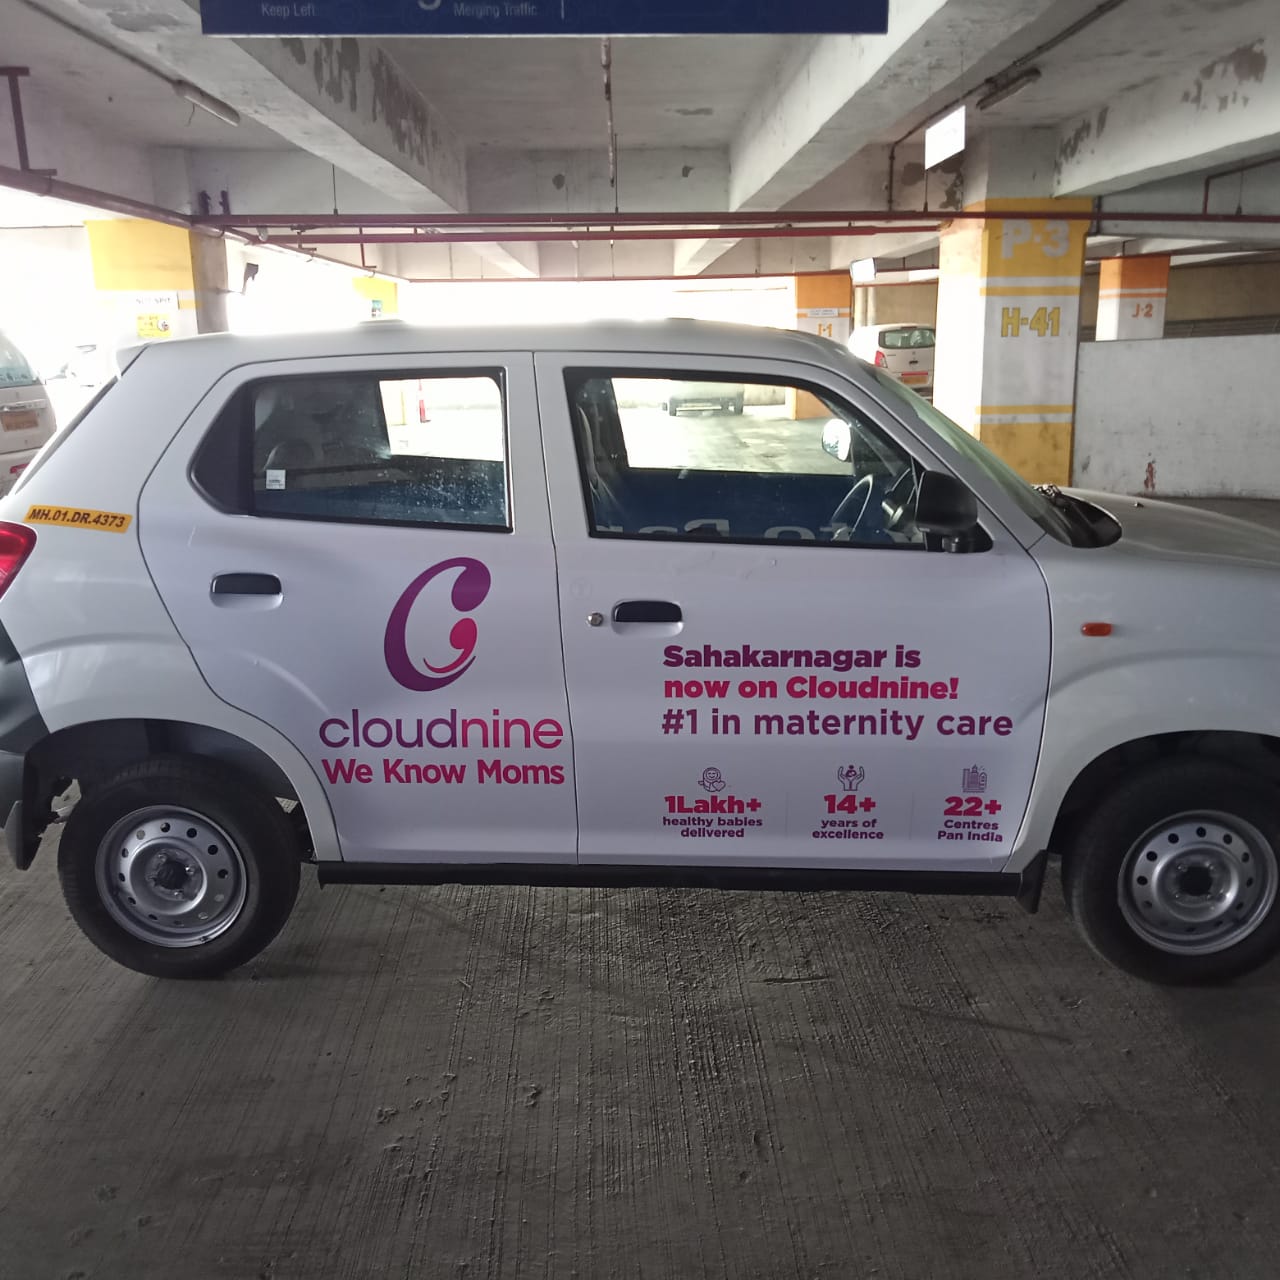 Taxi Branding Delhi, UBER car advertising Mumbai, Ola cab branding Chennai